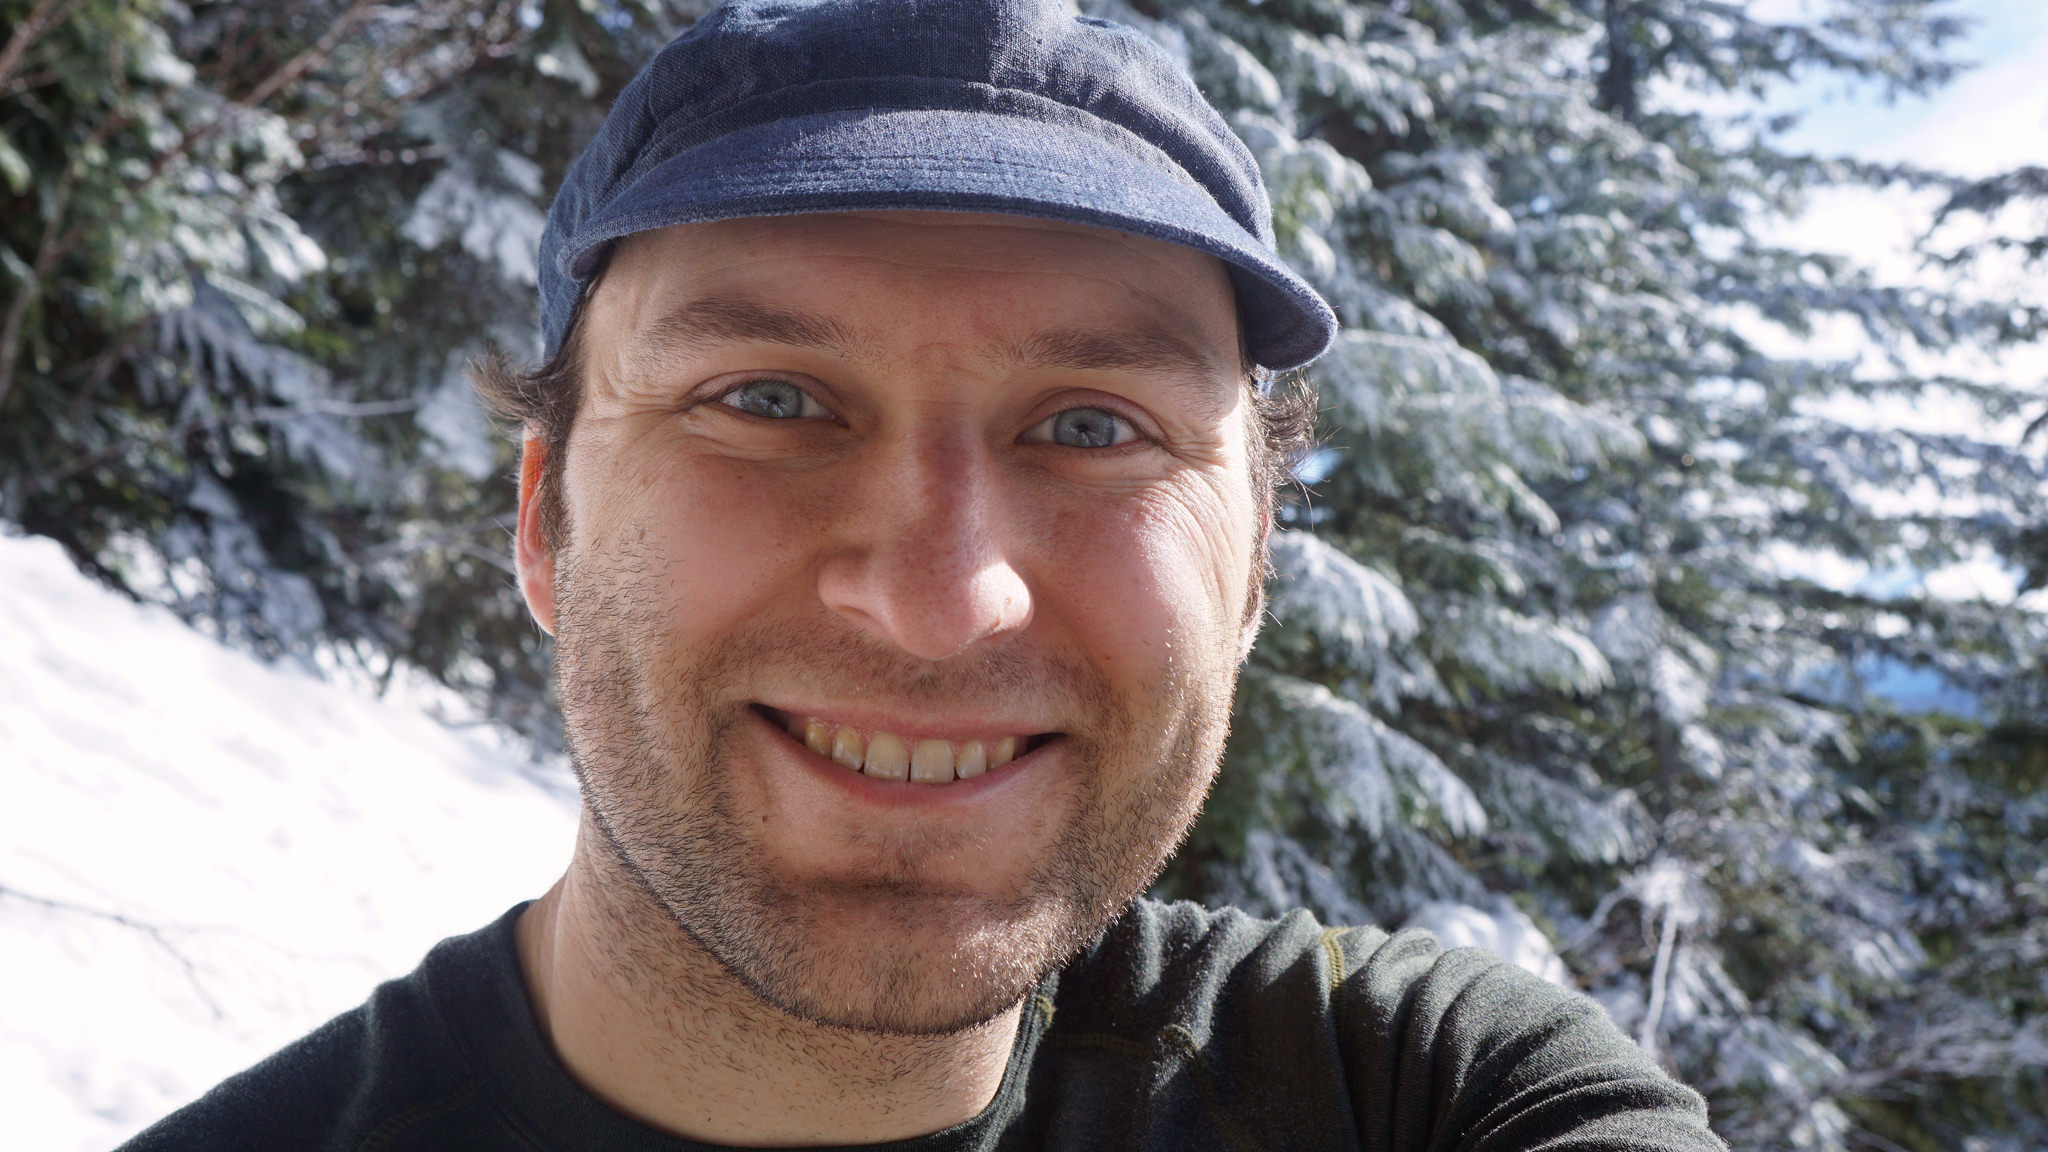 Self portrait in the snow wearing a blue cap